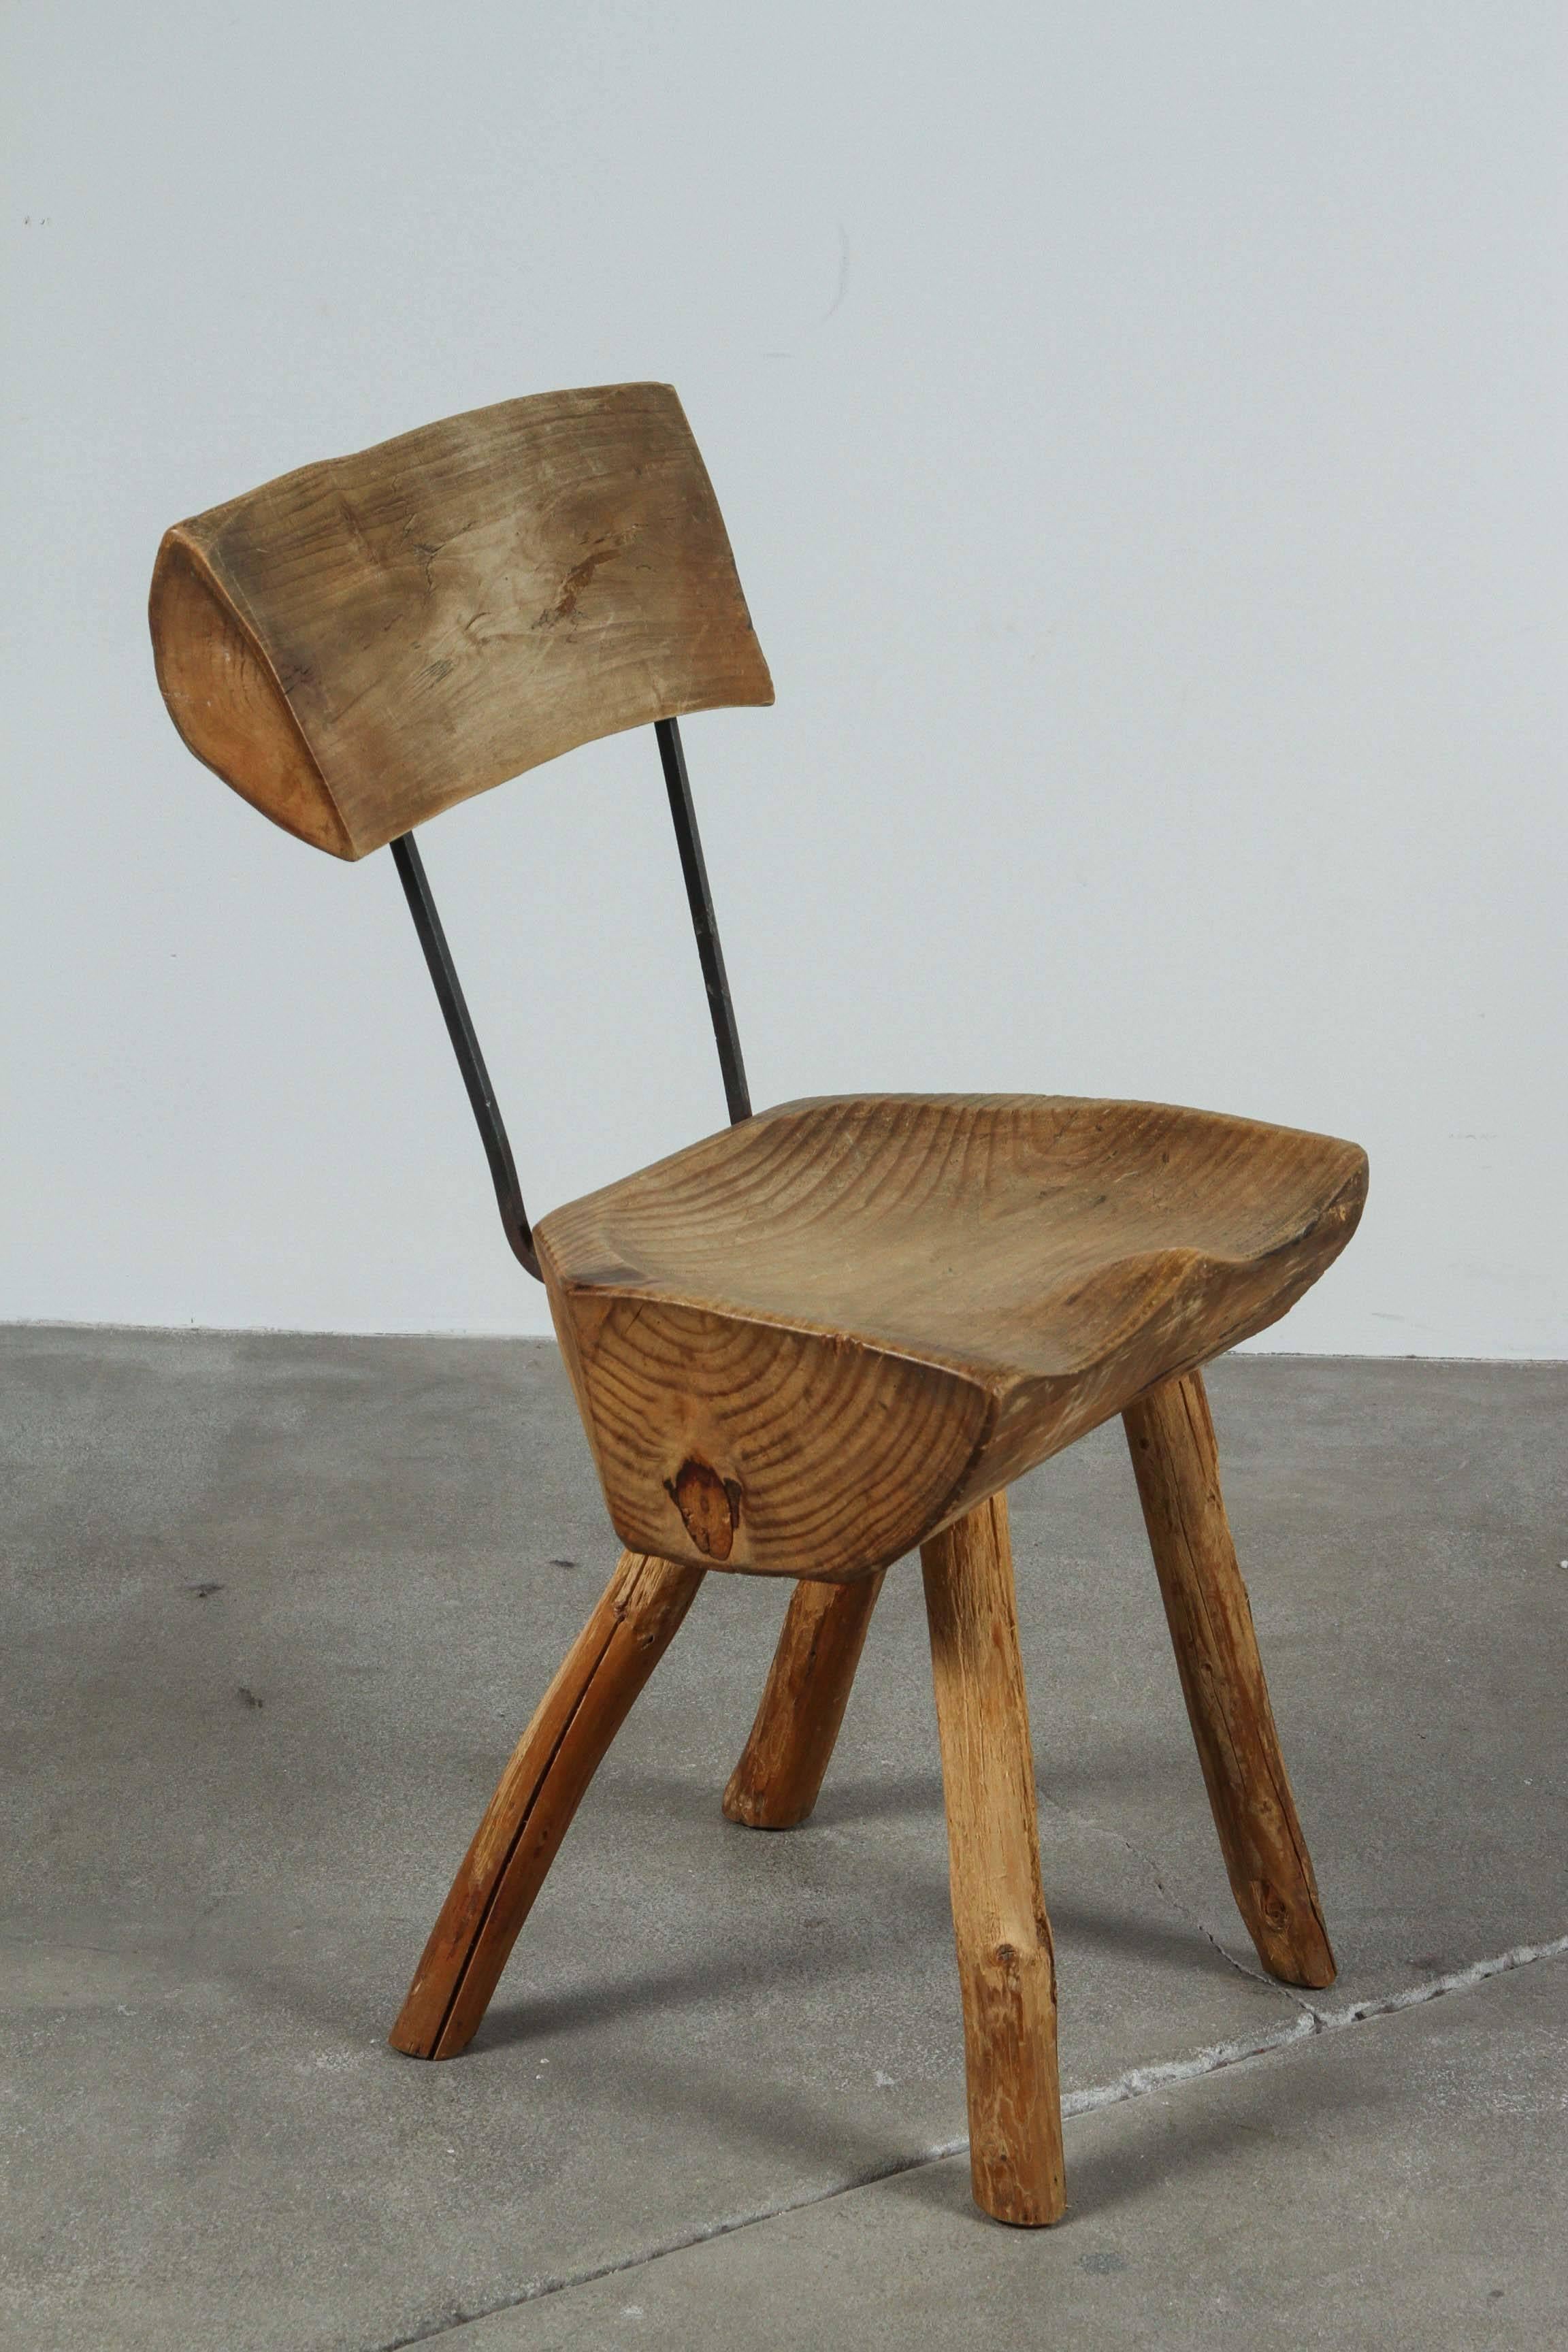 20th Century Rustic Log Chair